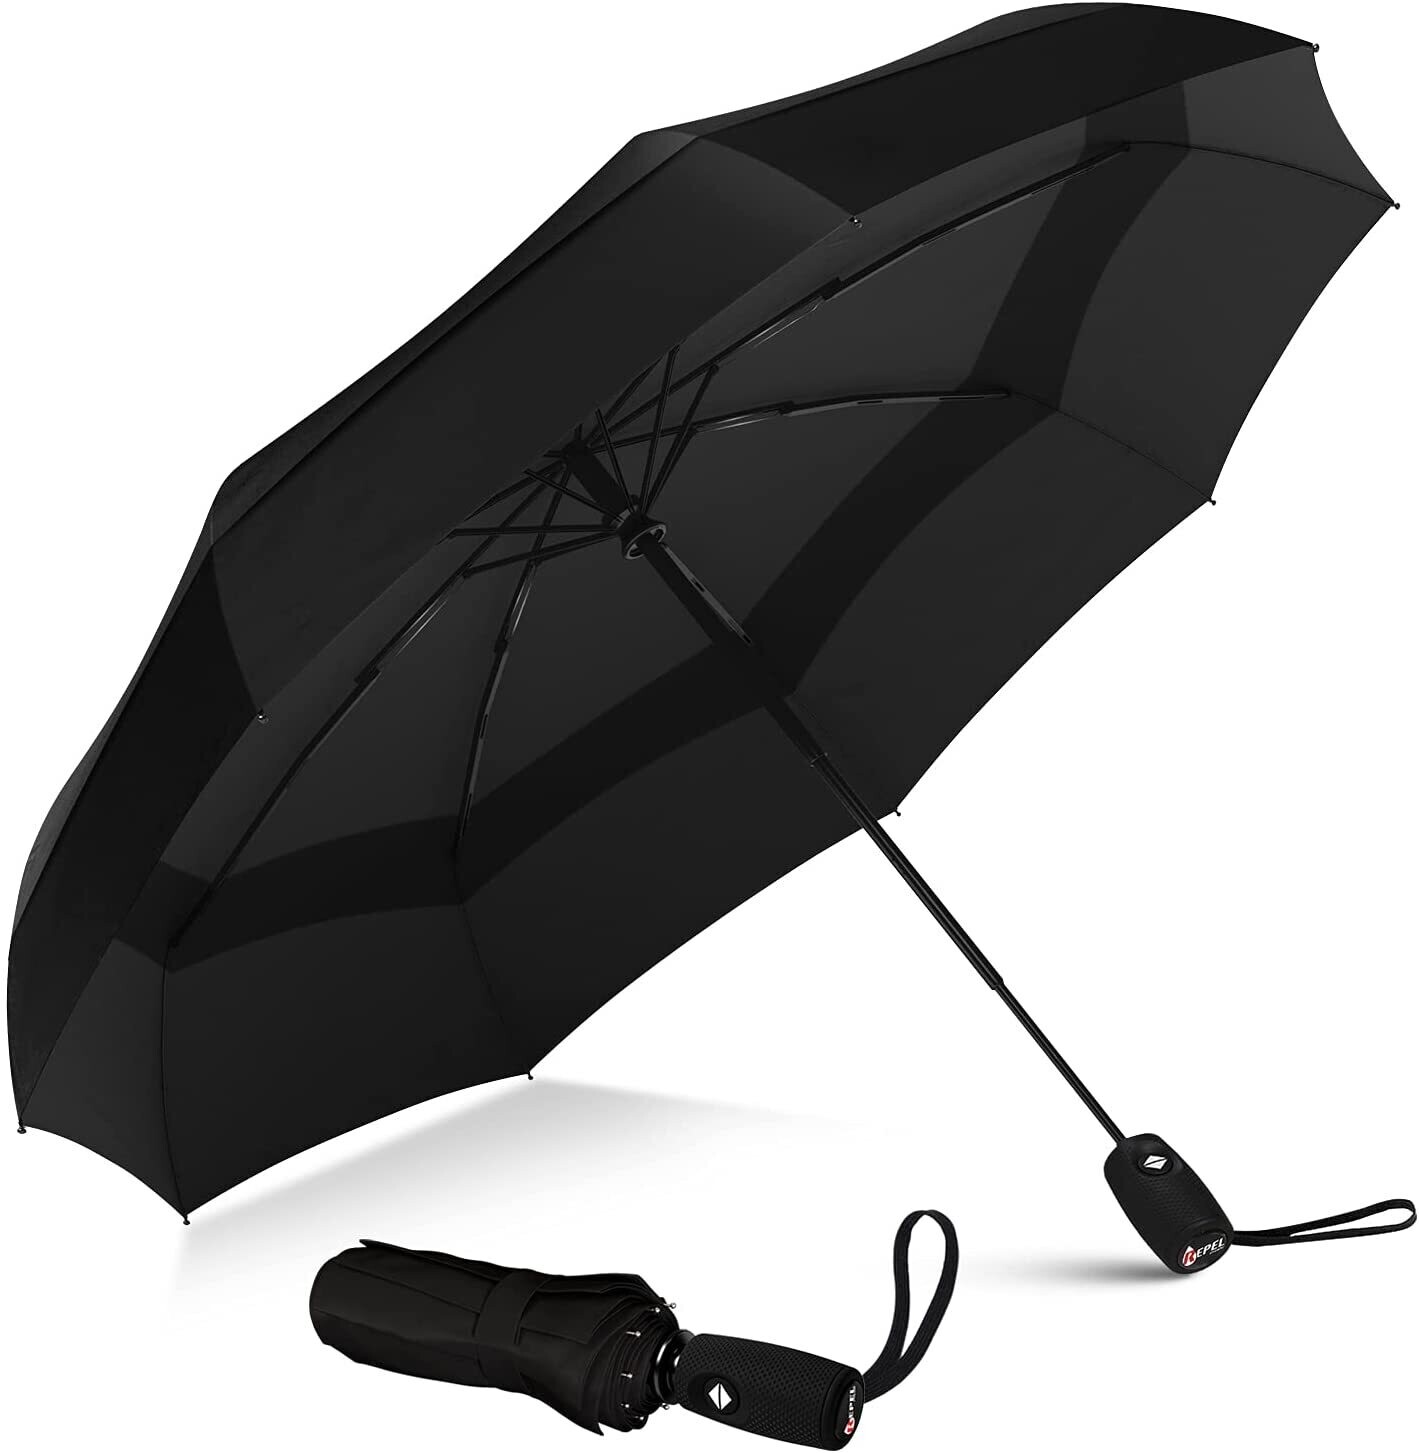 Windproof Travel Umbrella